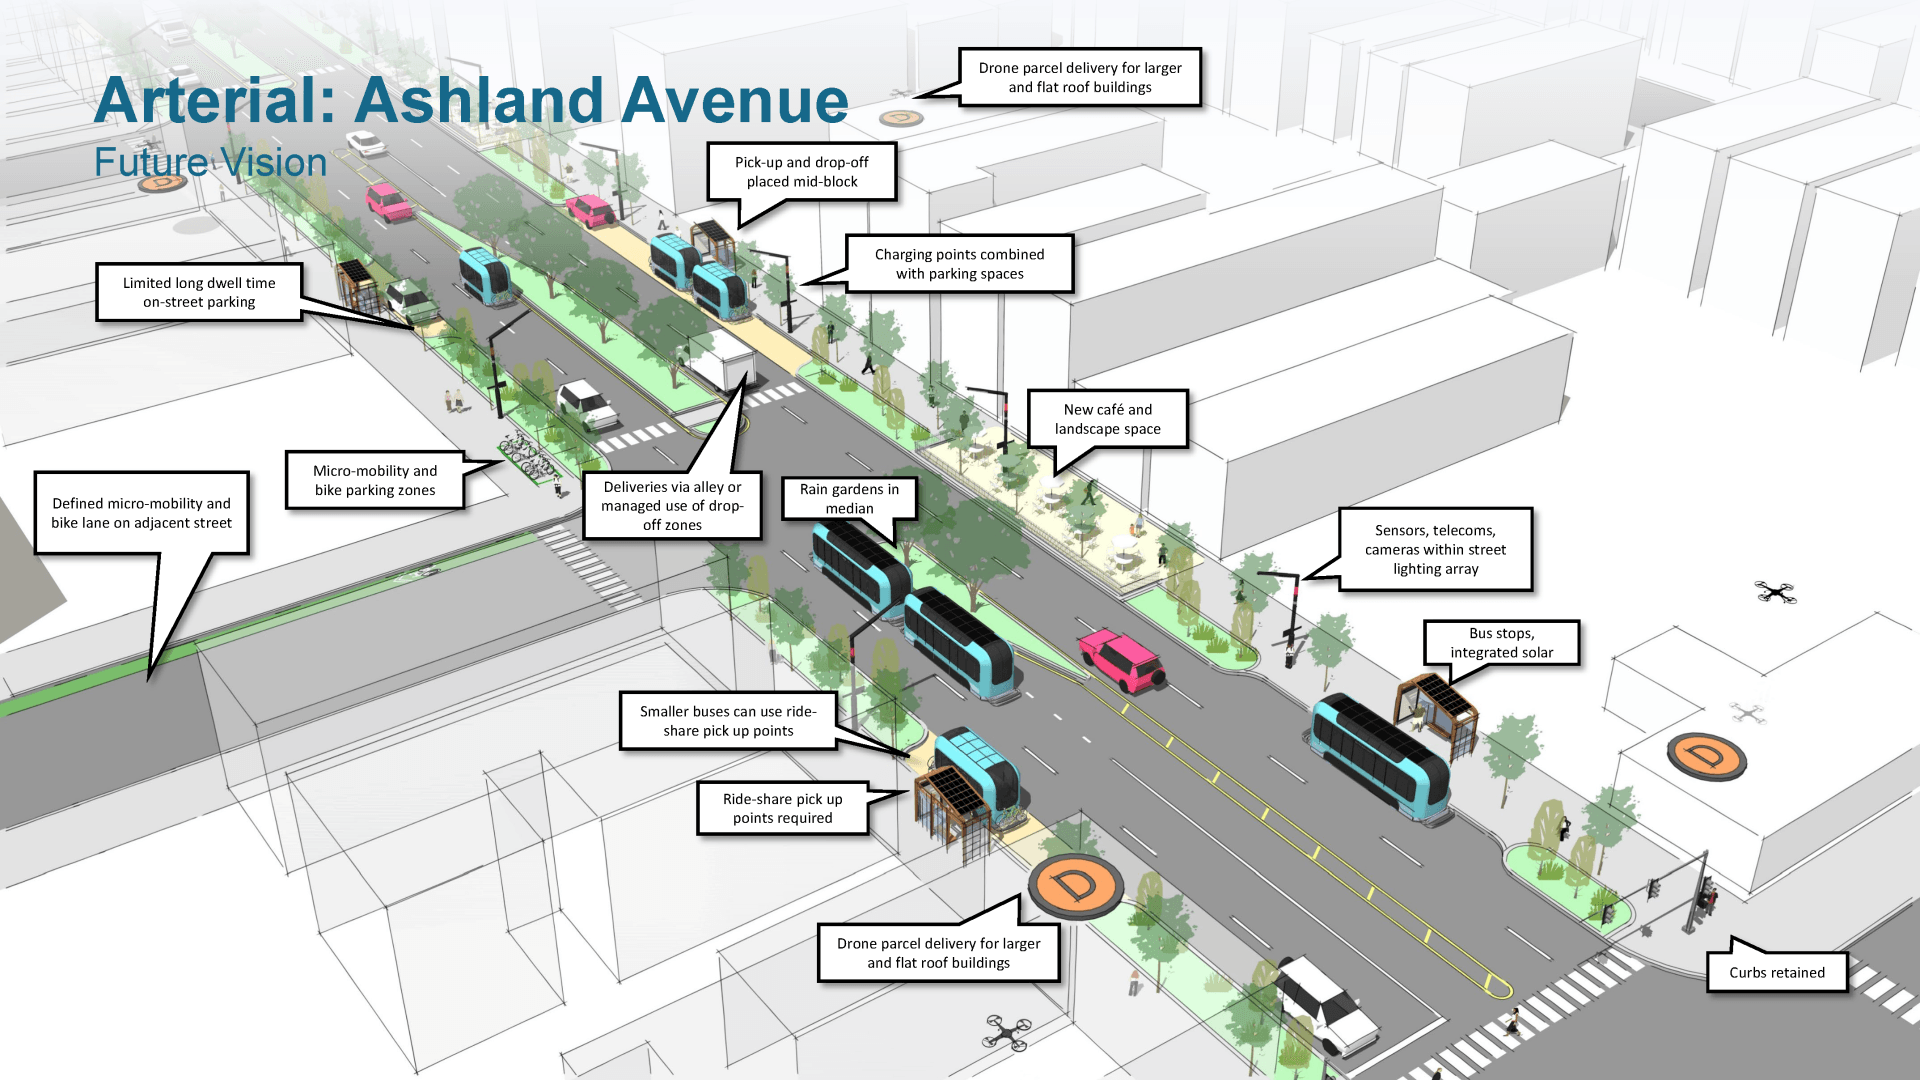 Illustration of Ashland Avenue's future vision in 2030